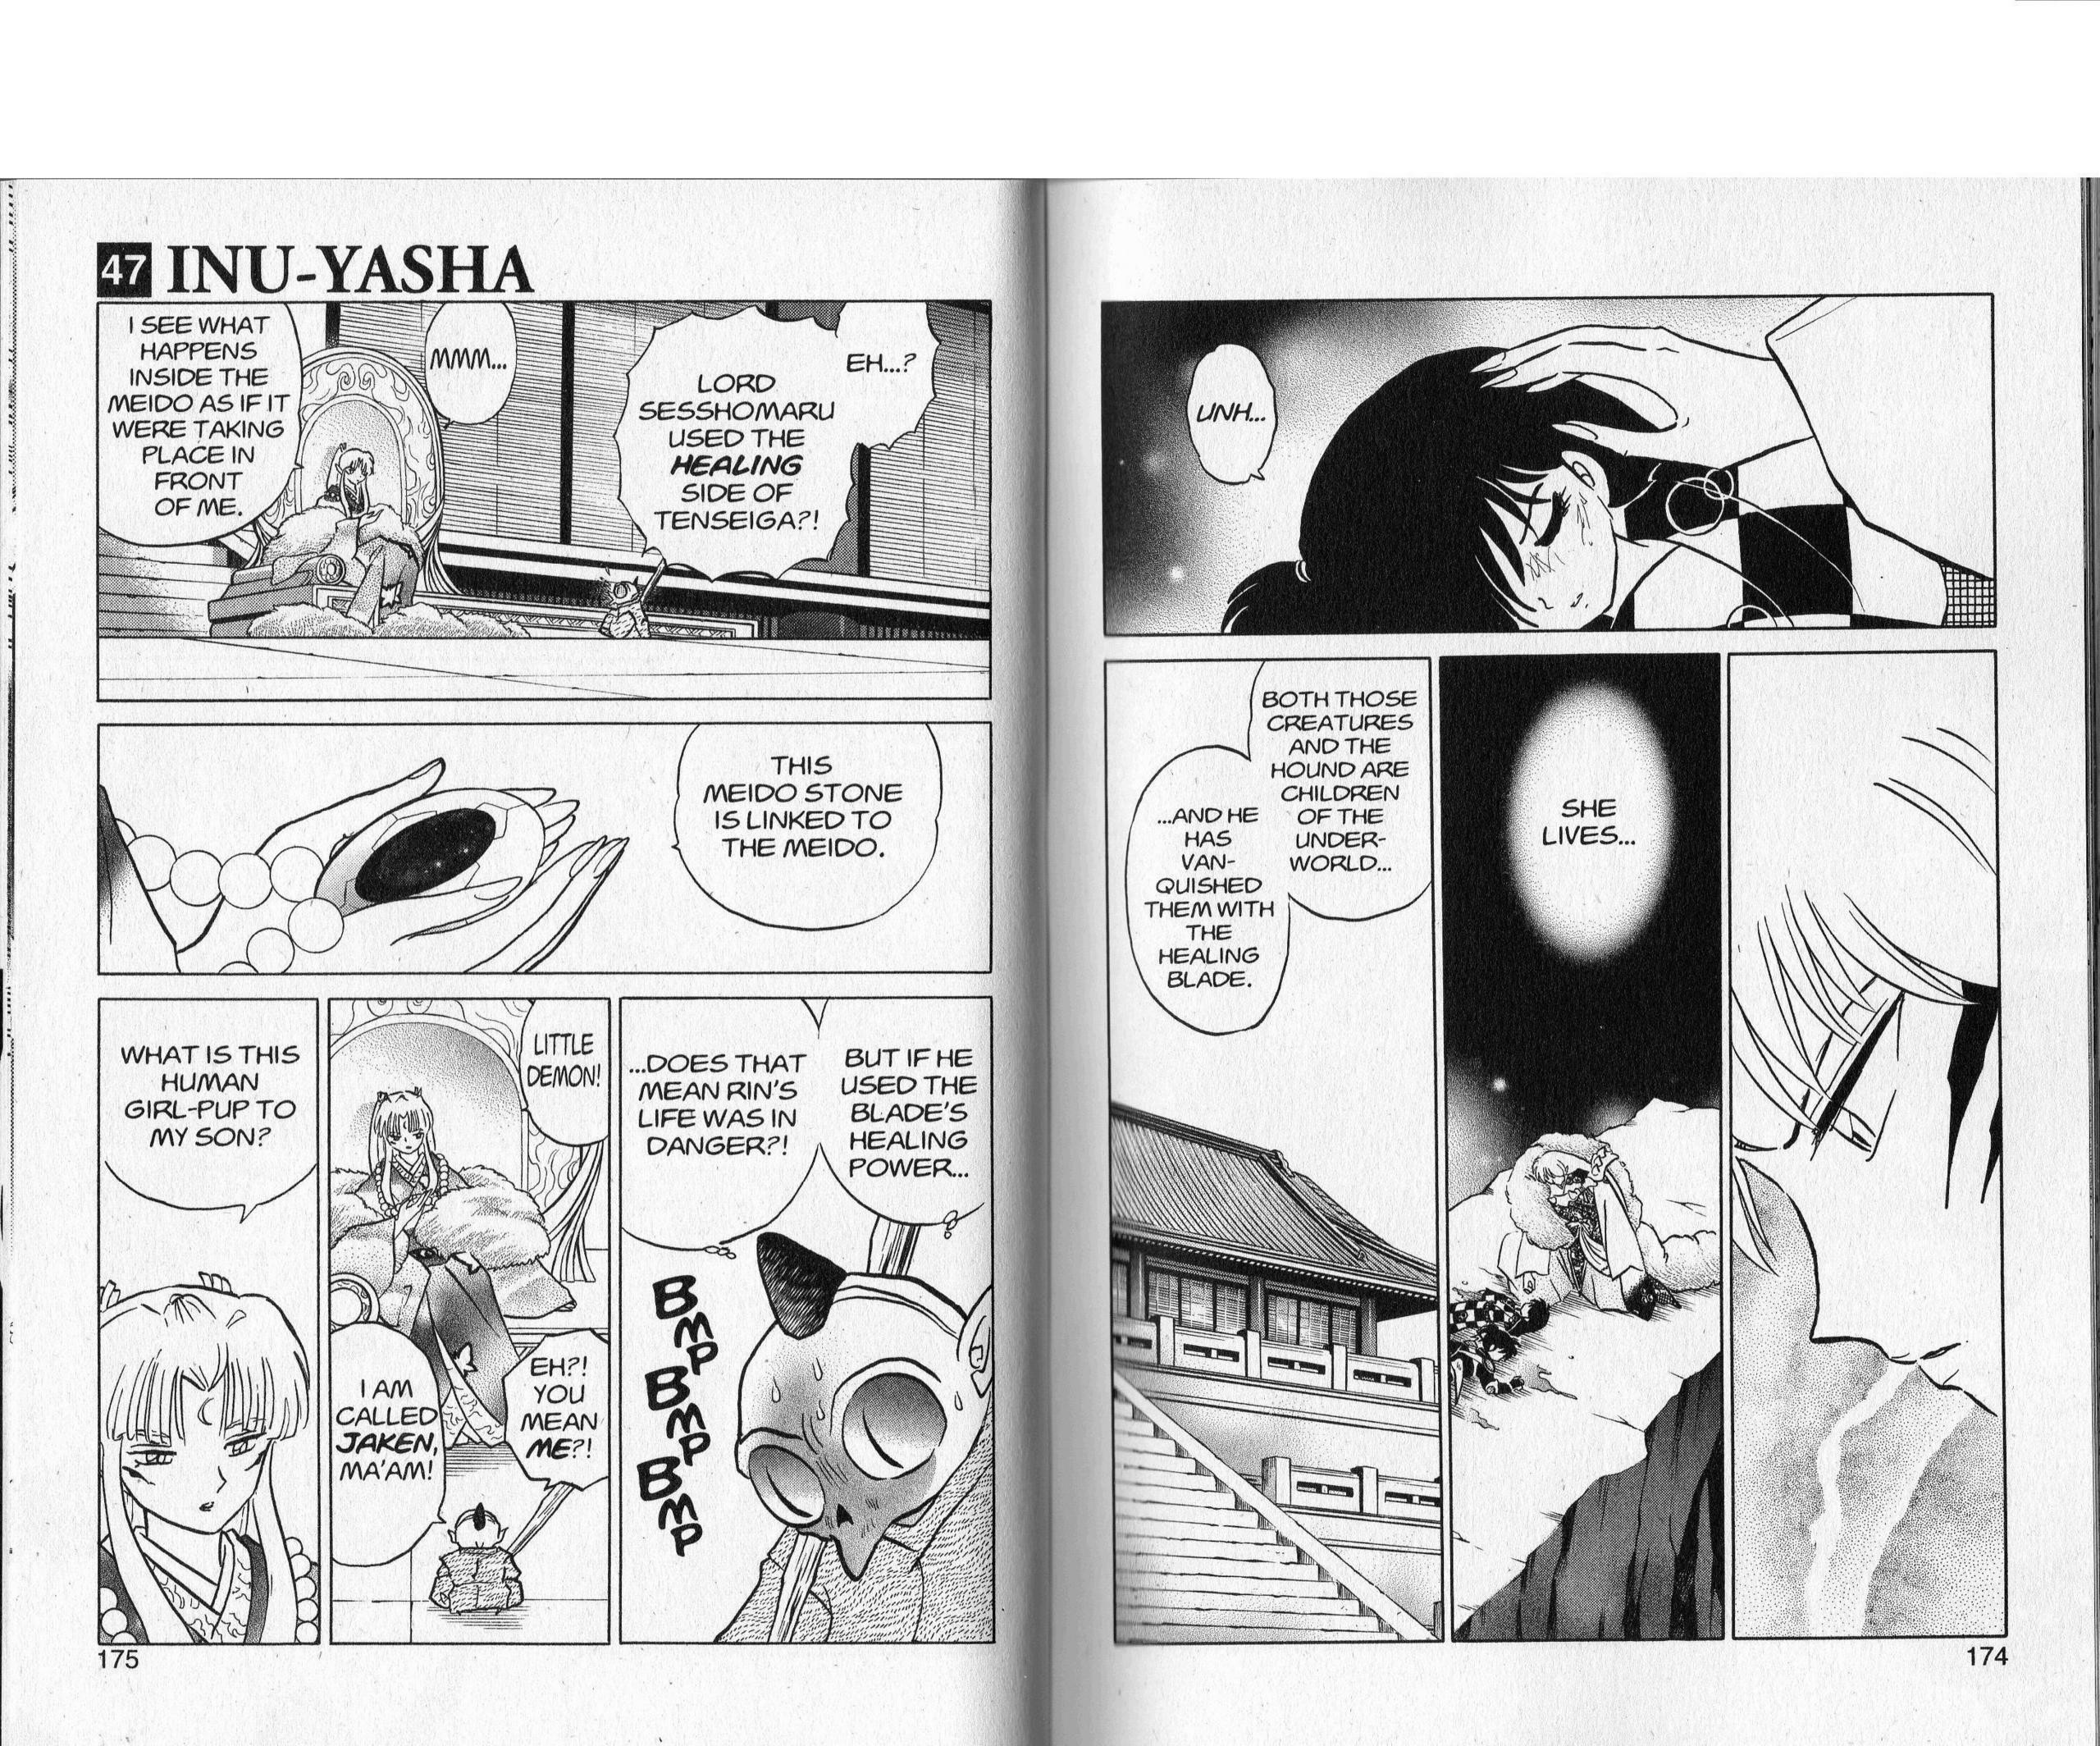 2560x2128 Sesshomaru and Rin images Sesshomaru, Rin and Kohaku, manga volume 47 HD  wallpaper and background photos